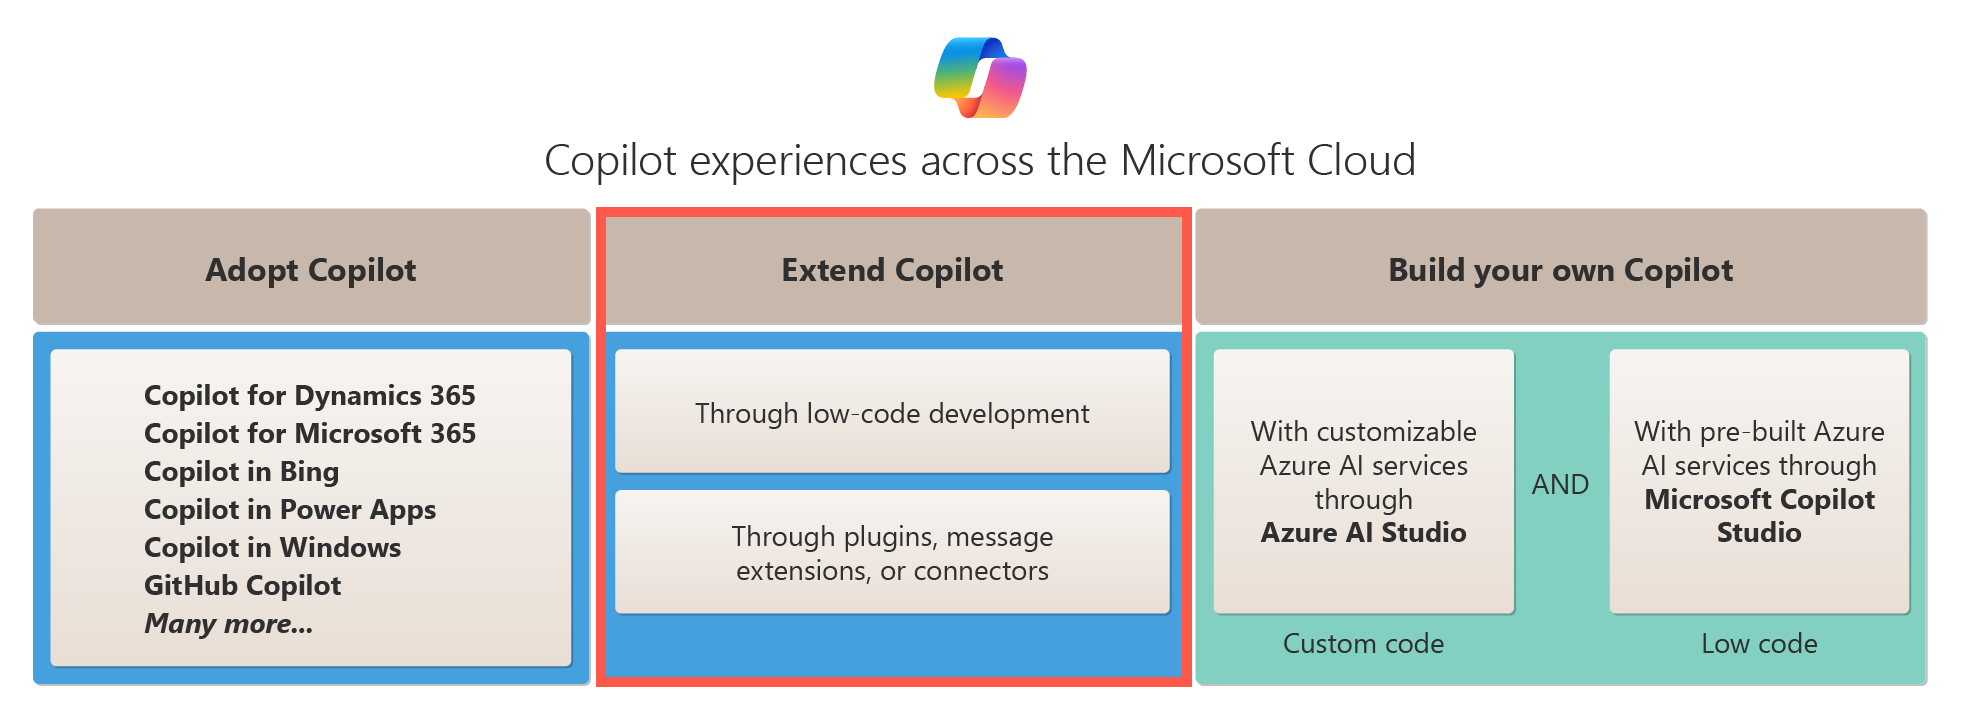 A diagram showing extend options for a Copilot across the Microsoft Cloud.